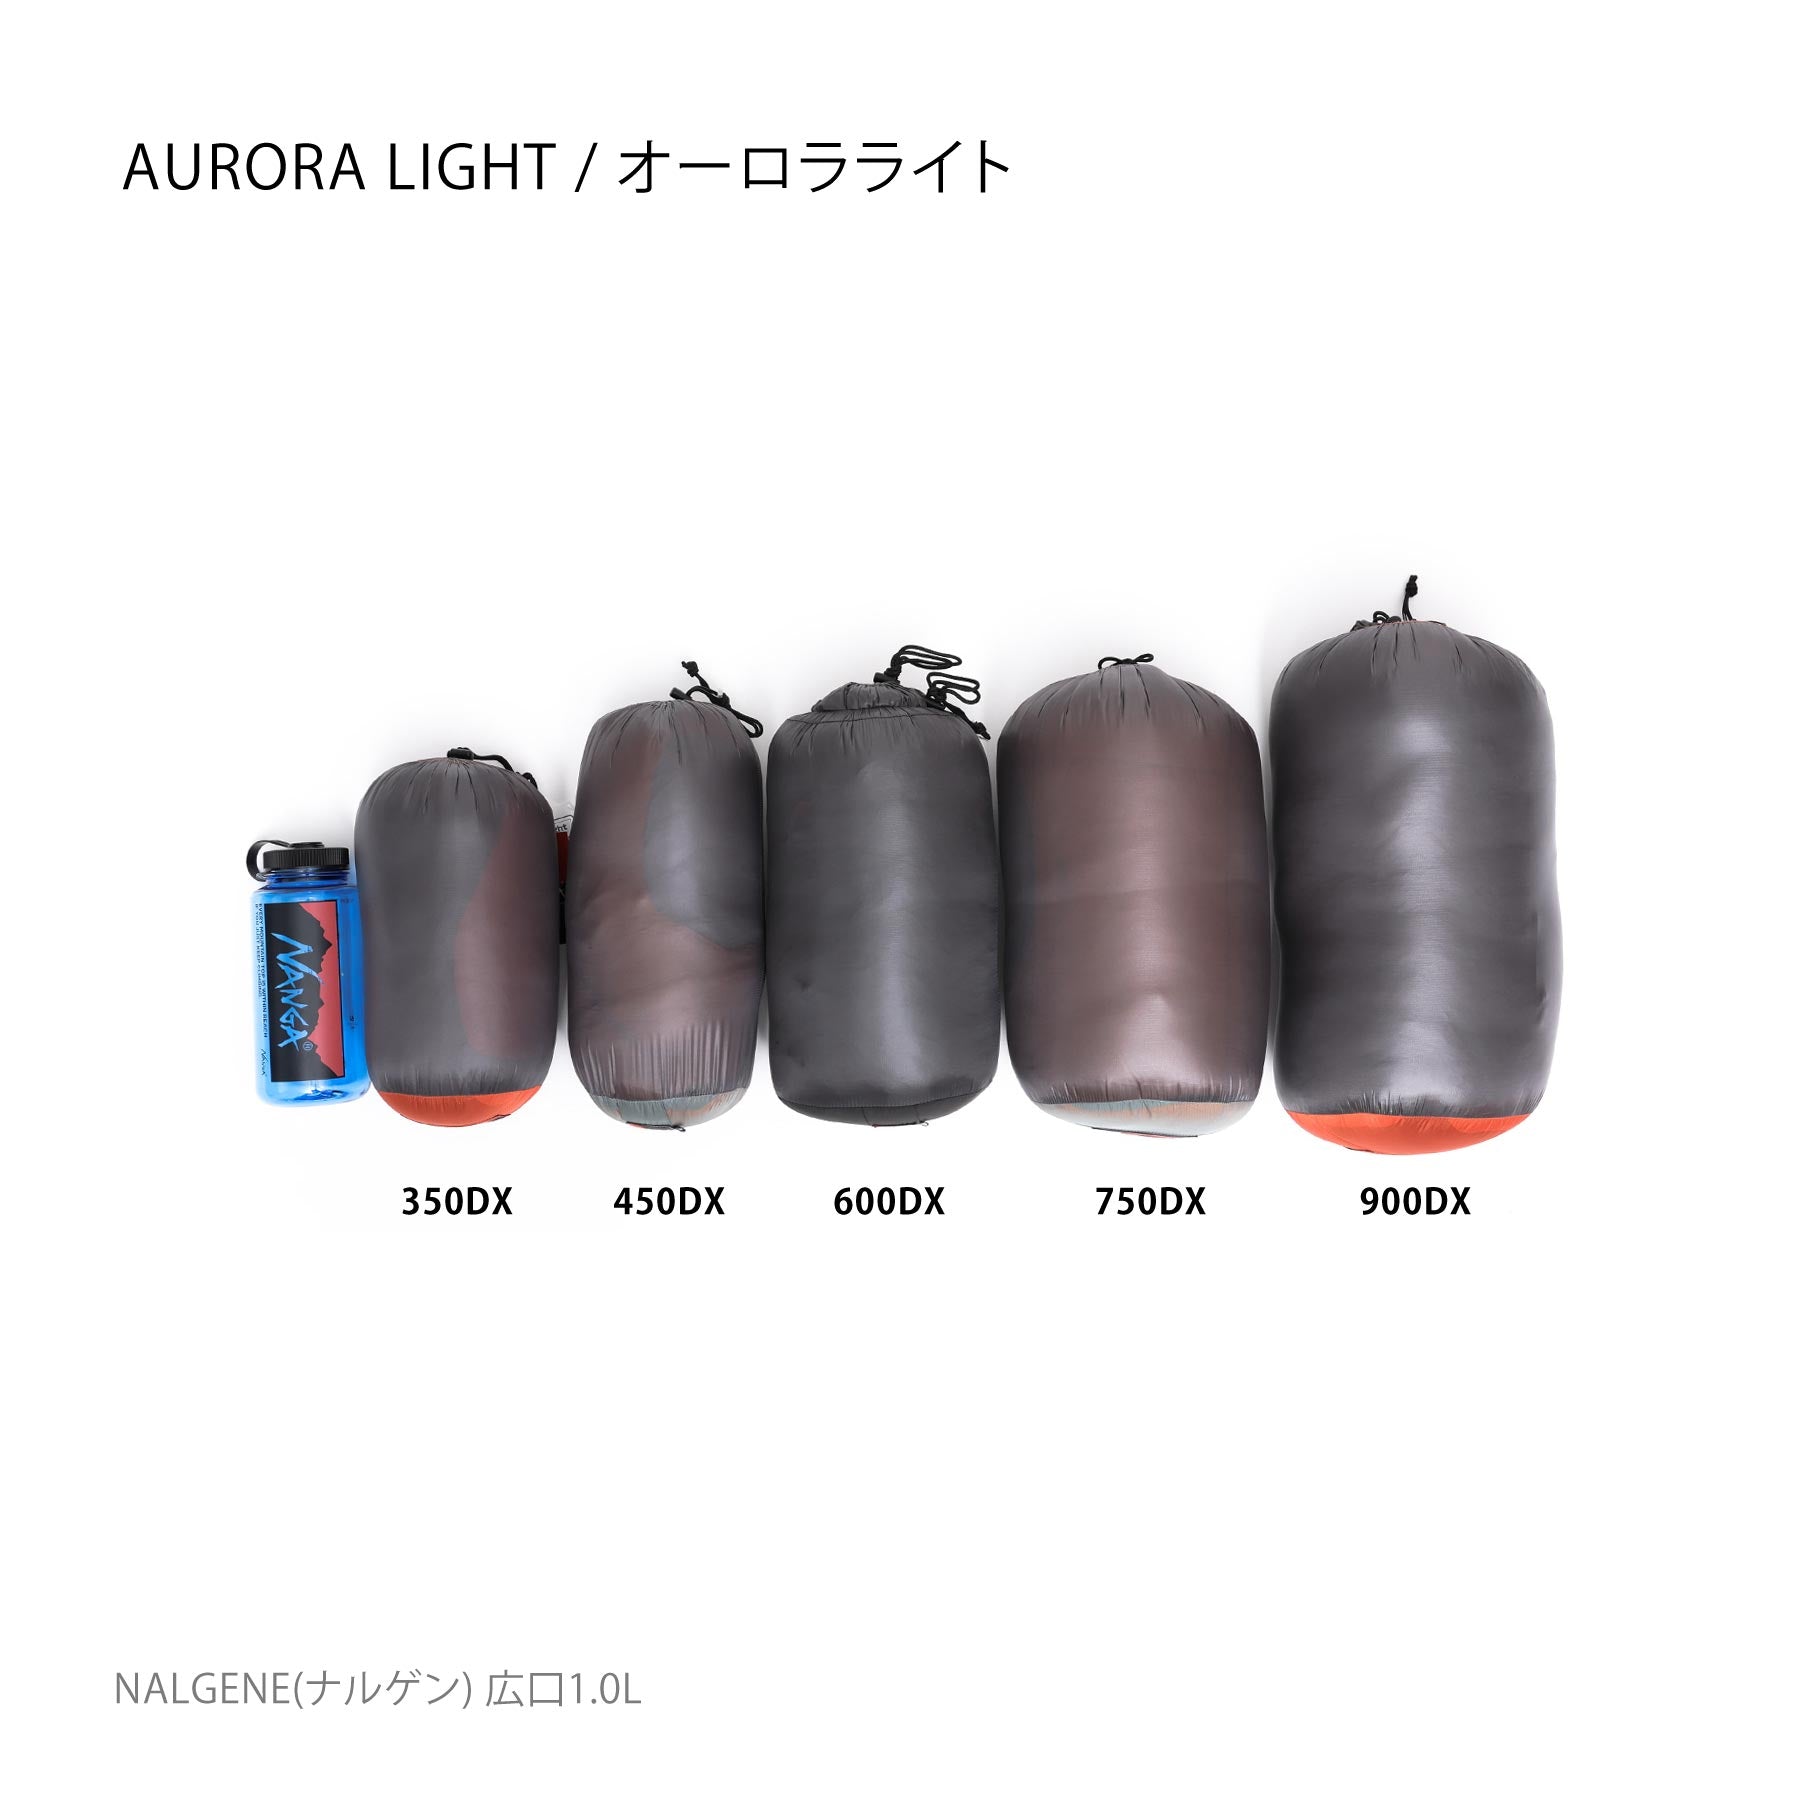 AURORA light 600 DX / オーロラライト600DX – NANGA ONLINE SHOP